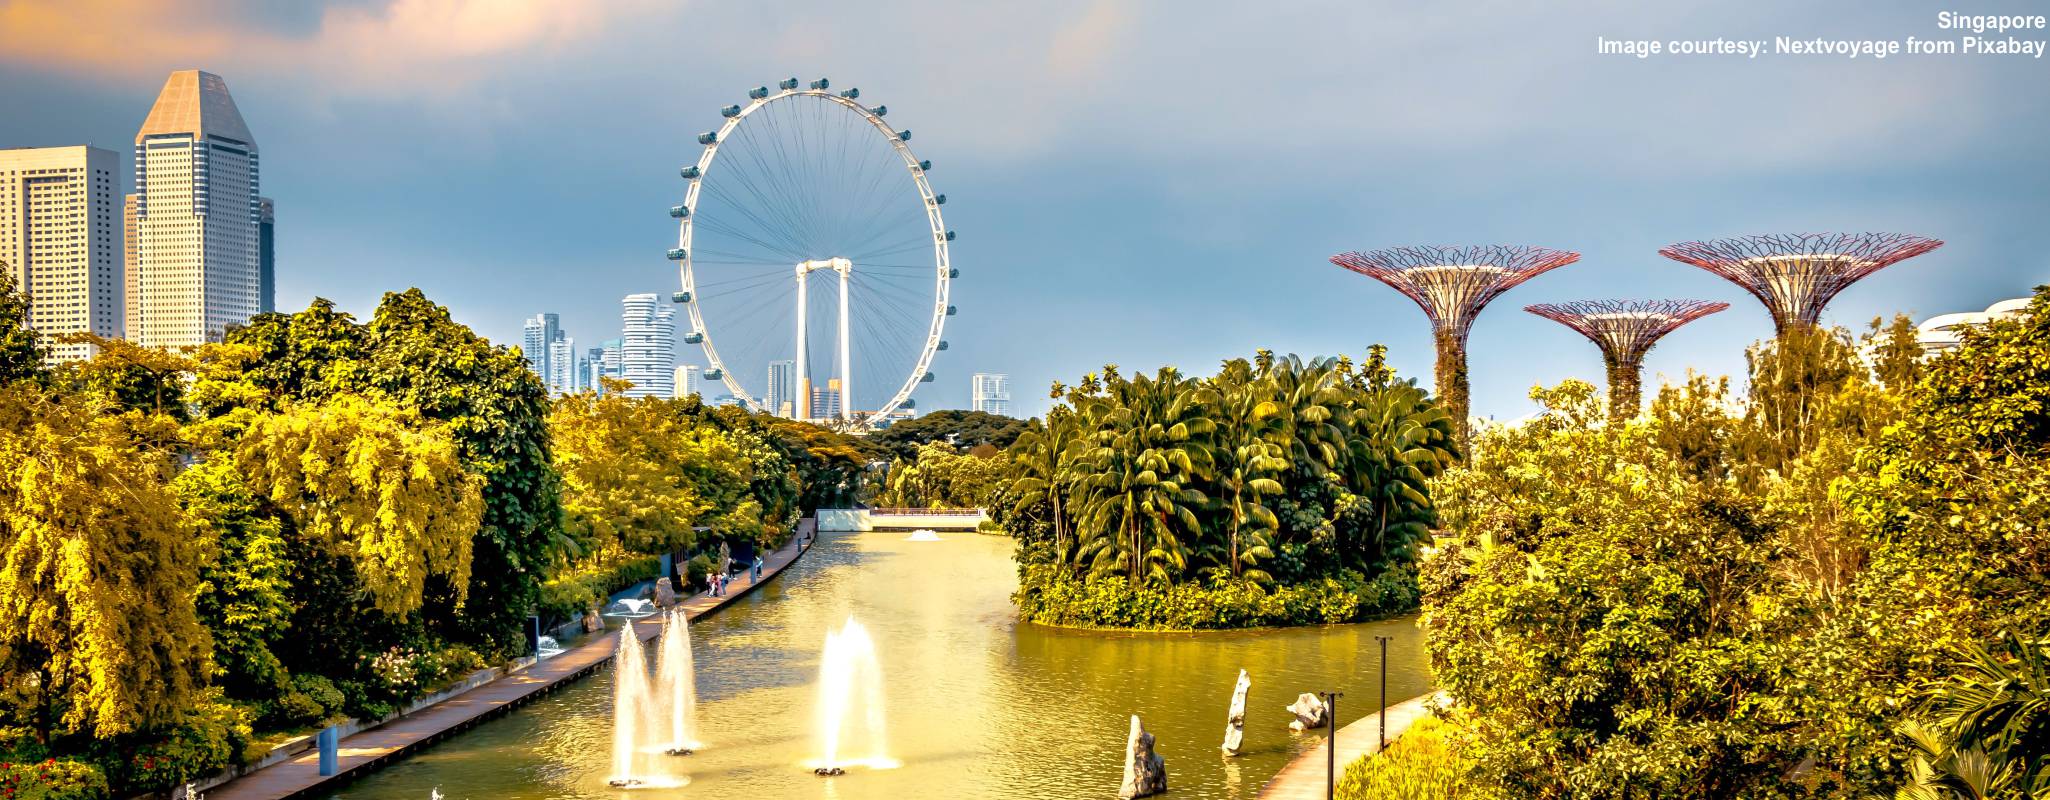 Singapore City image